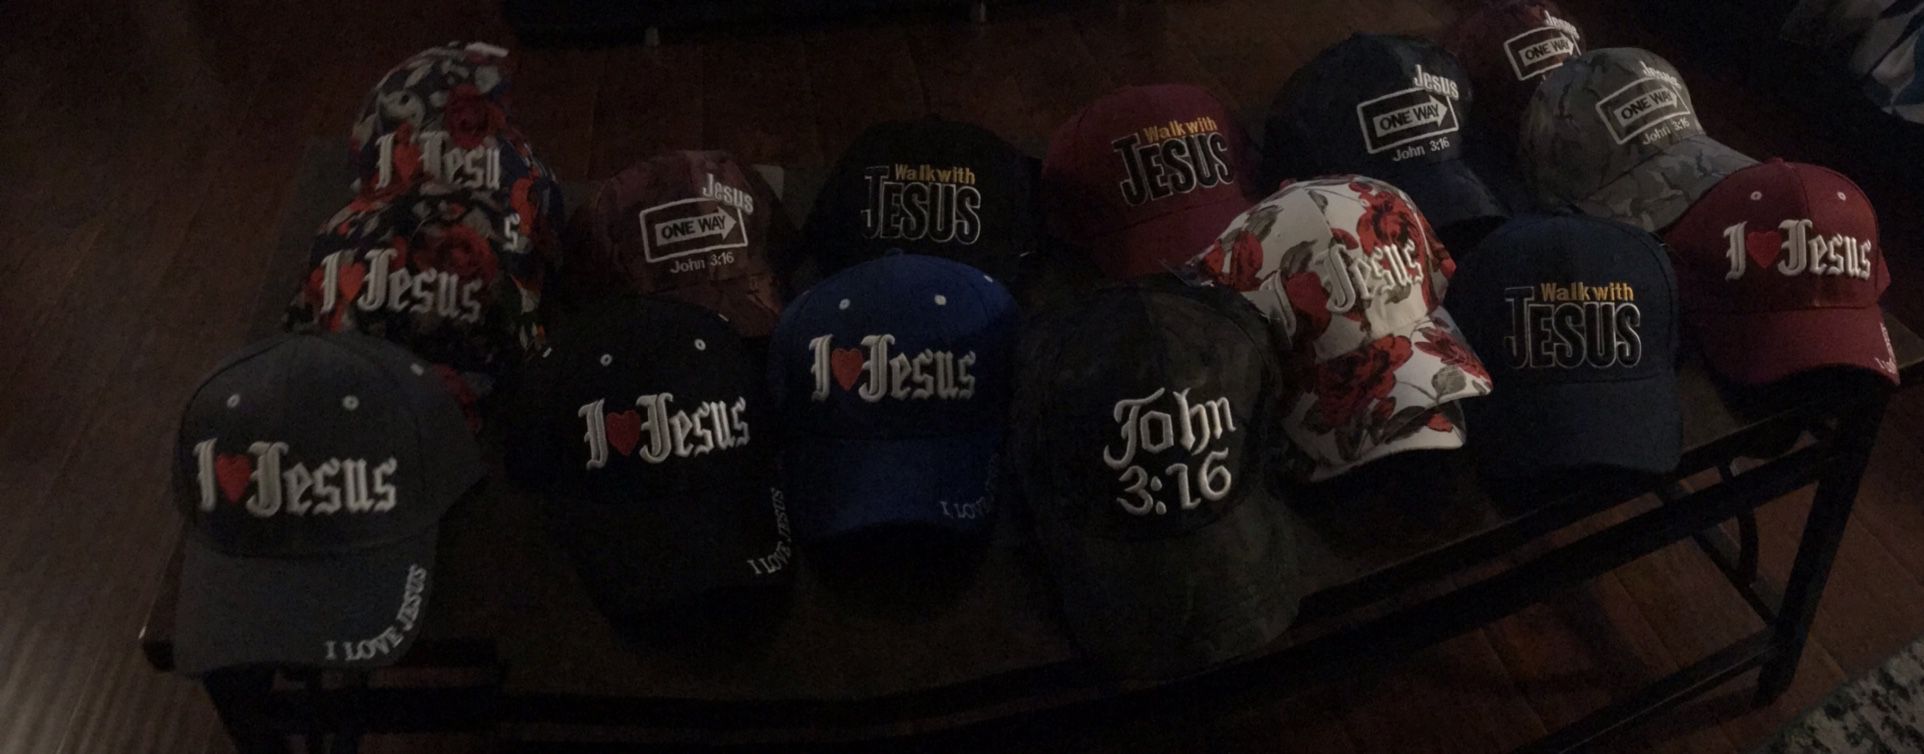 I Love Jesus Hats